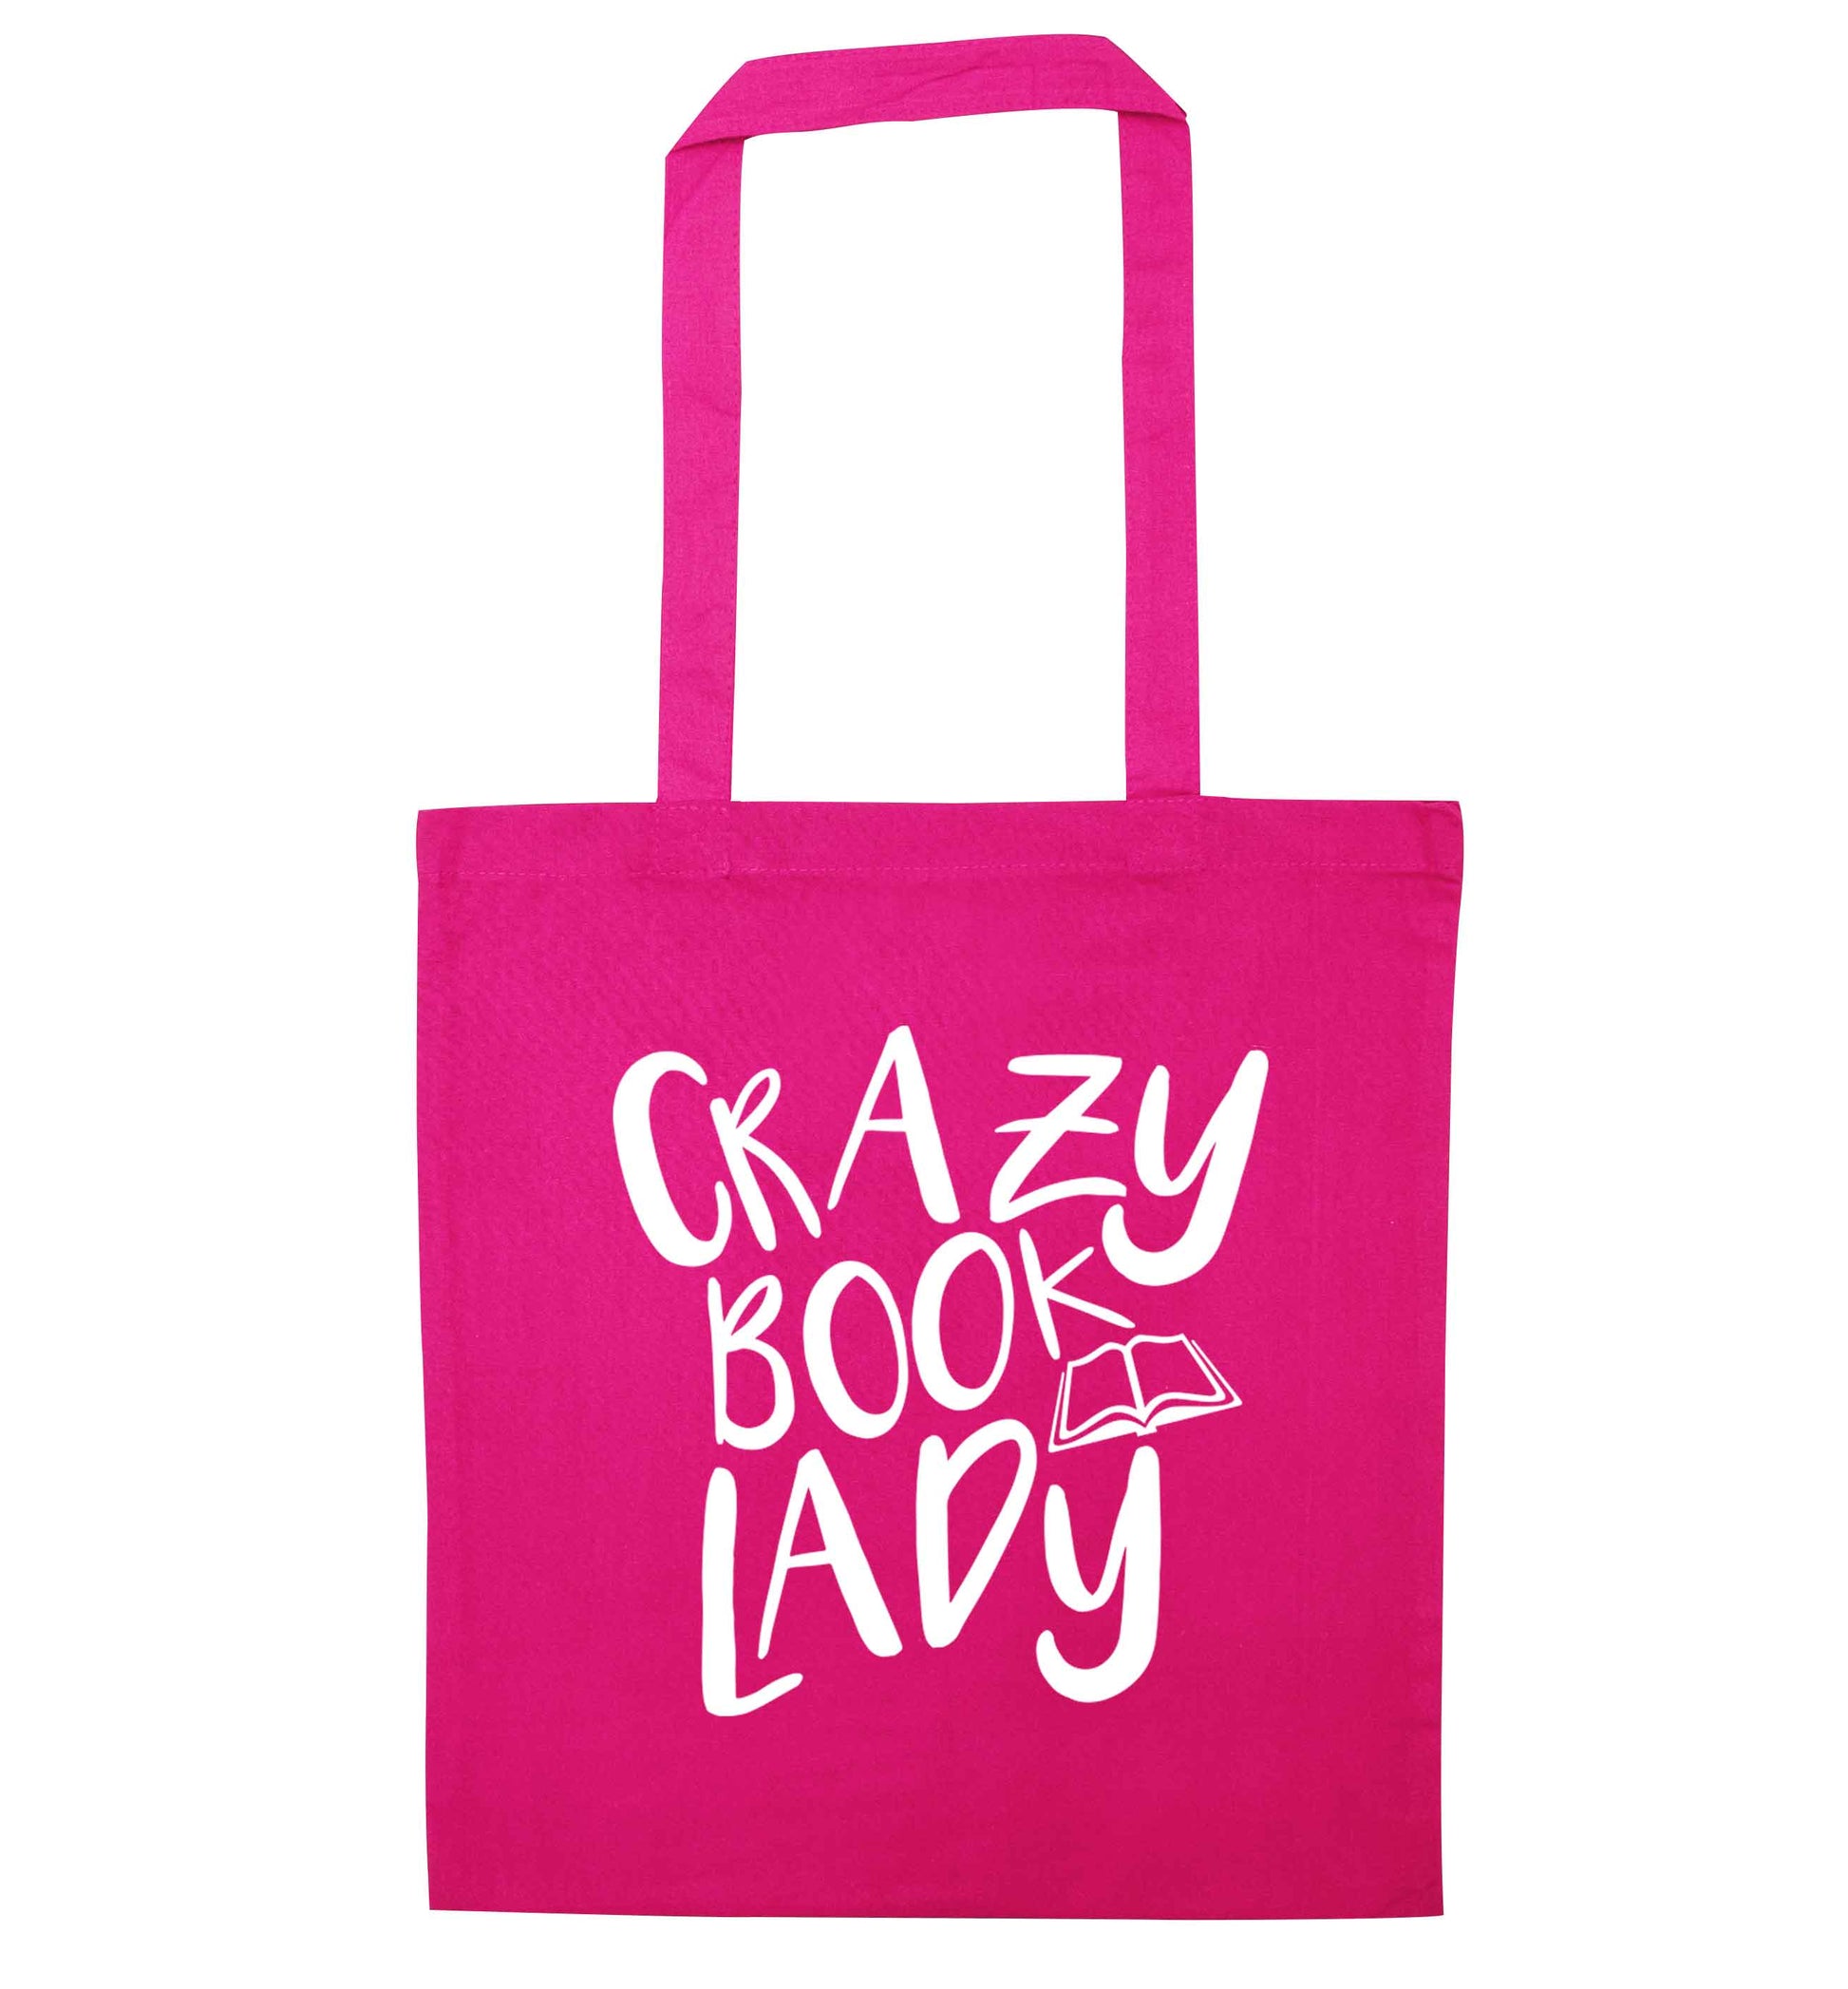 Crazy book lady pink tote bag